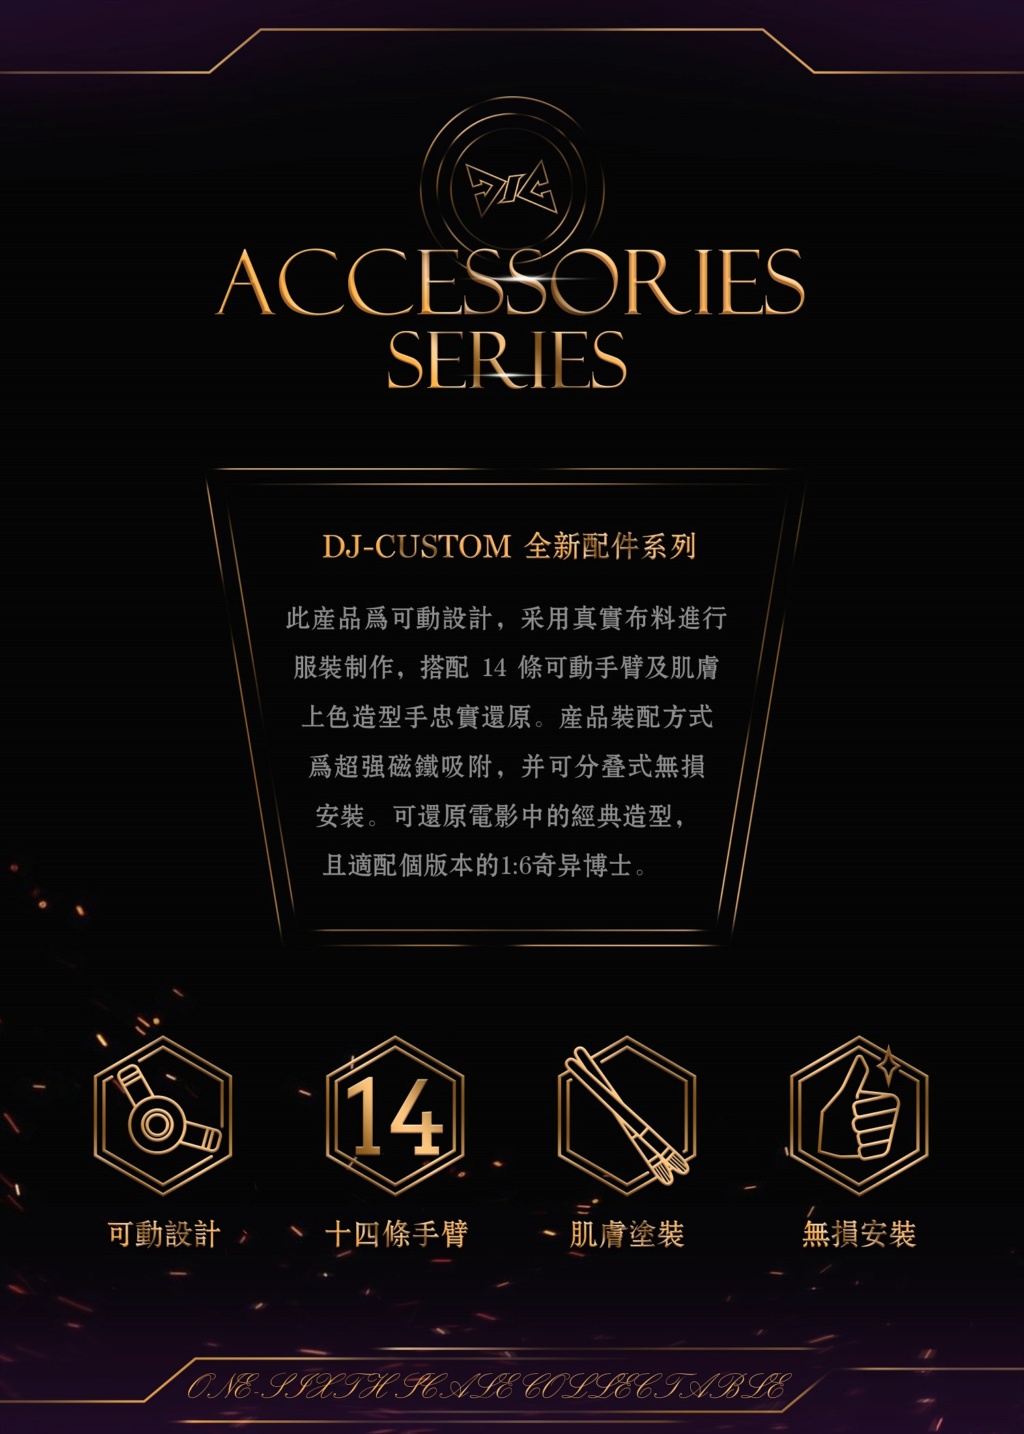 accessories - NEW PRODUCT: DJ-CUSTOM Accessories Series: 1/6 Aiken Shaped Hands (AS001) 5195